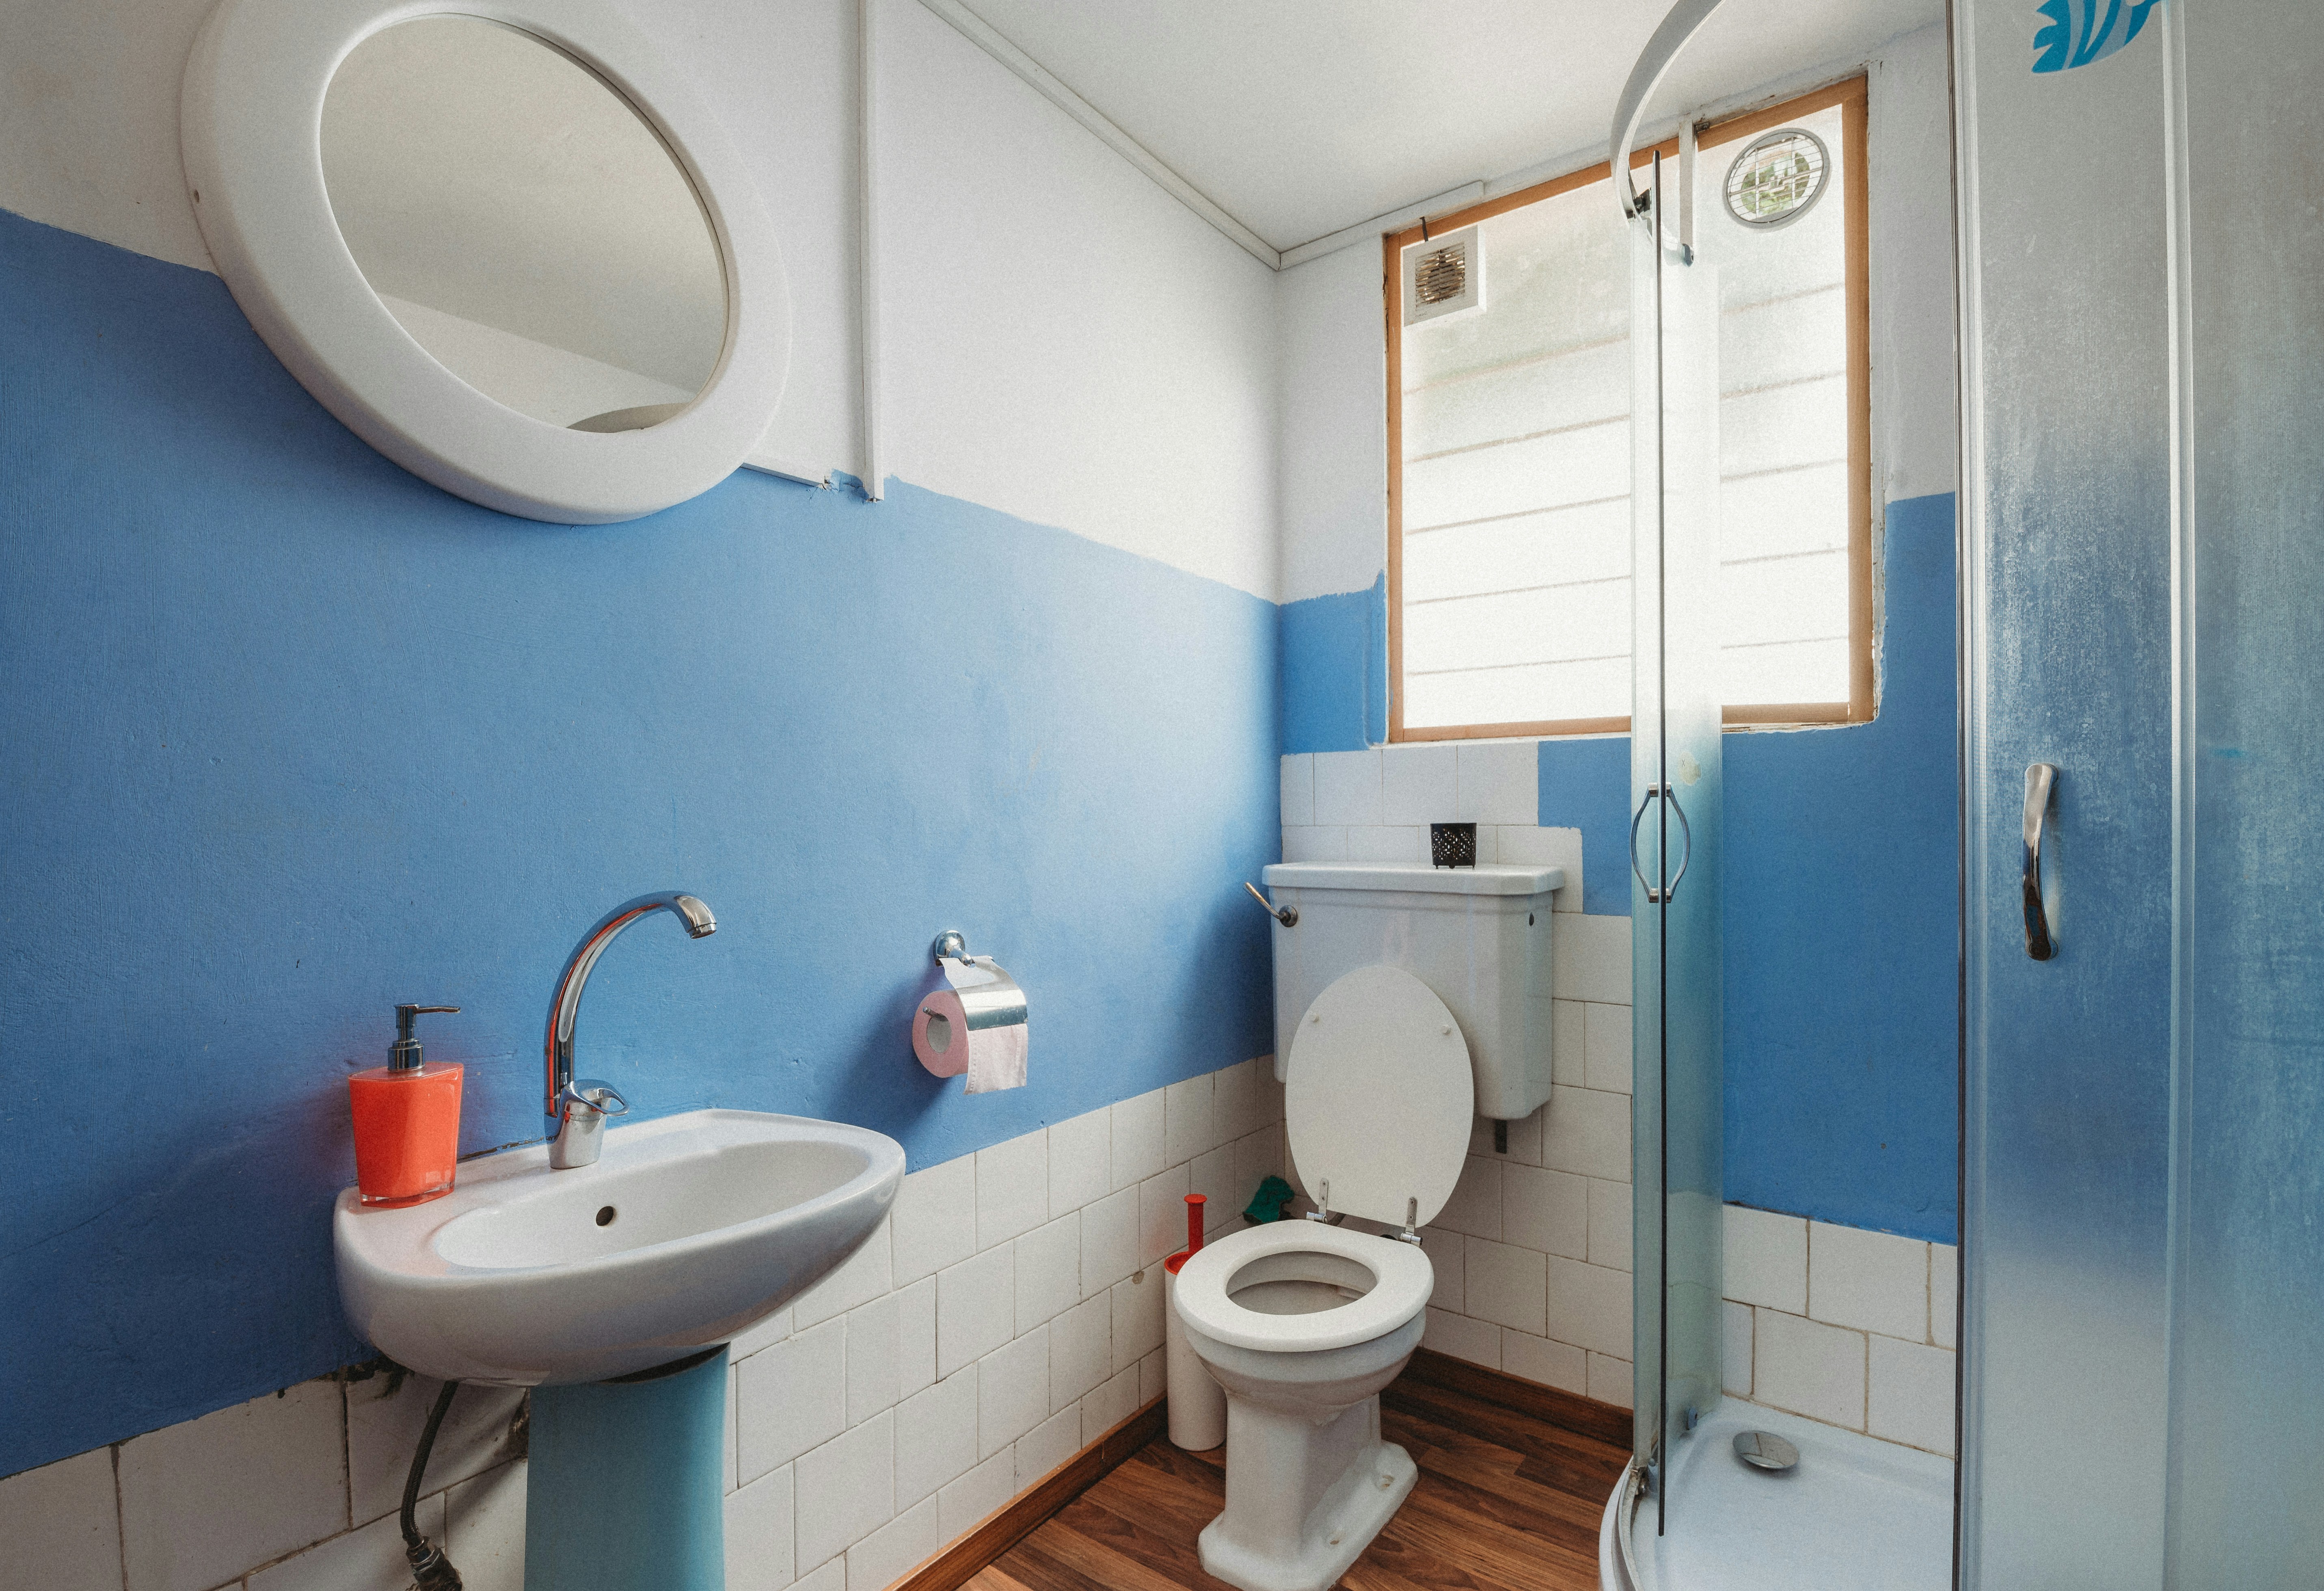 Toilet with Bidet Home Depot - Sleek and Modern Design